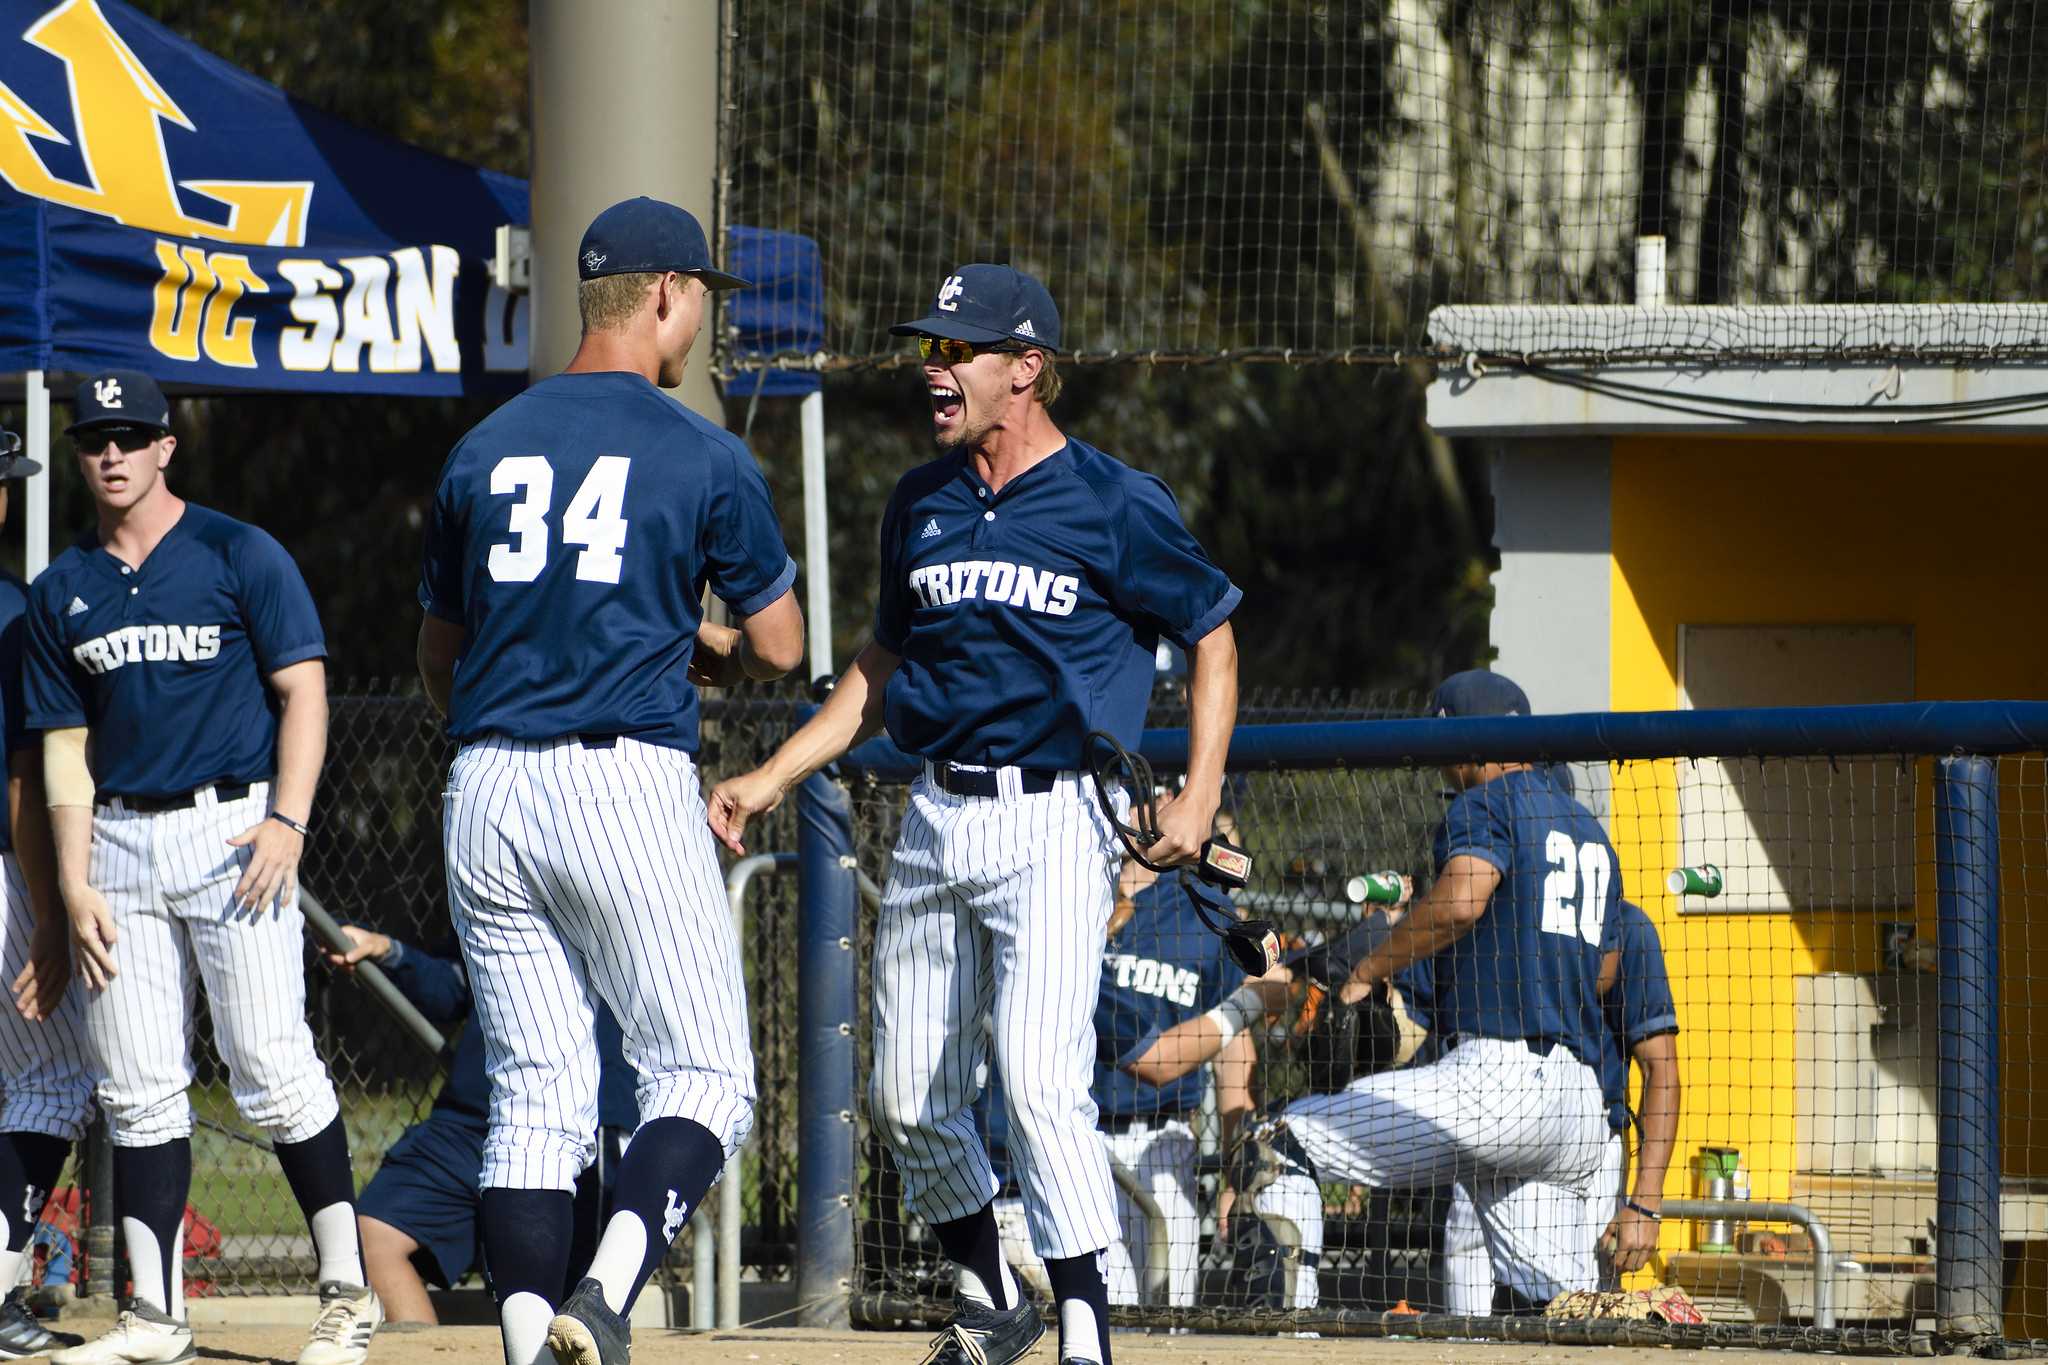 UC San Diego Baseball Advances to Championship Round UCSD Guardian